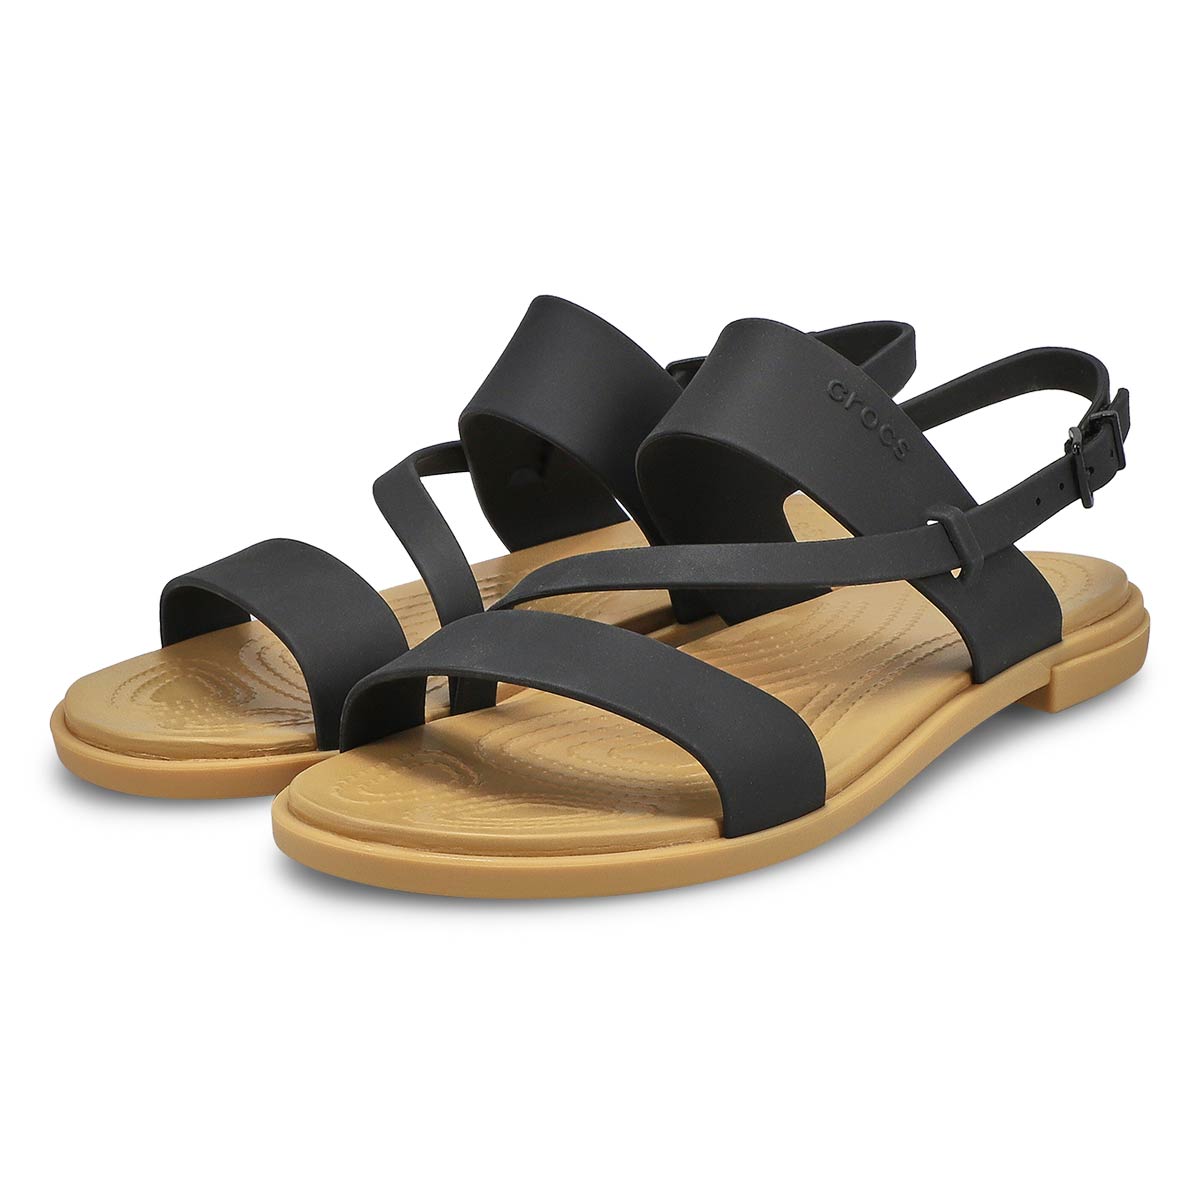 Crocs Women's Tulum Strappy Sandal - Black/Ta | SoftMoc.com